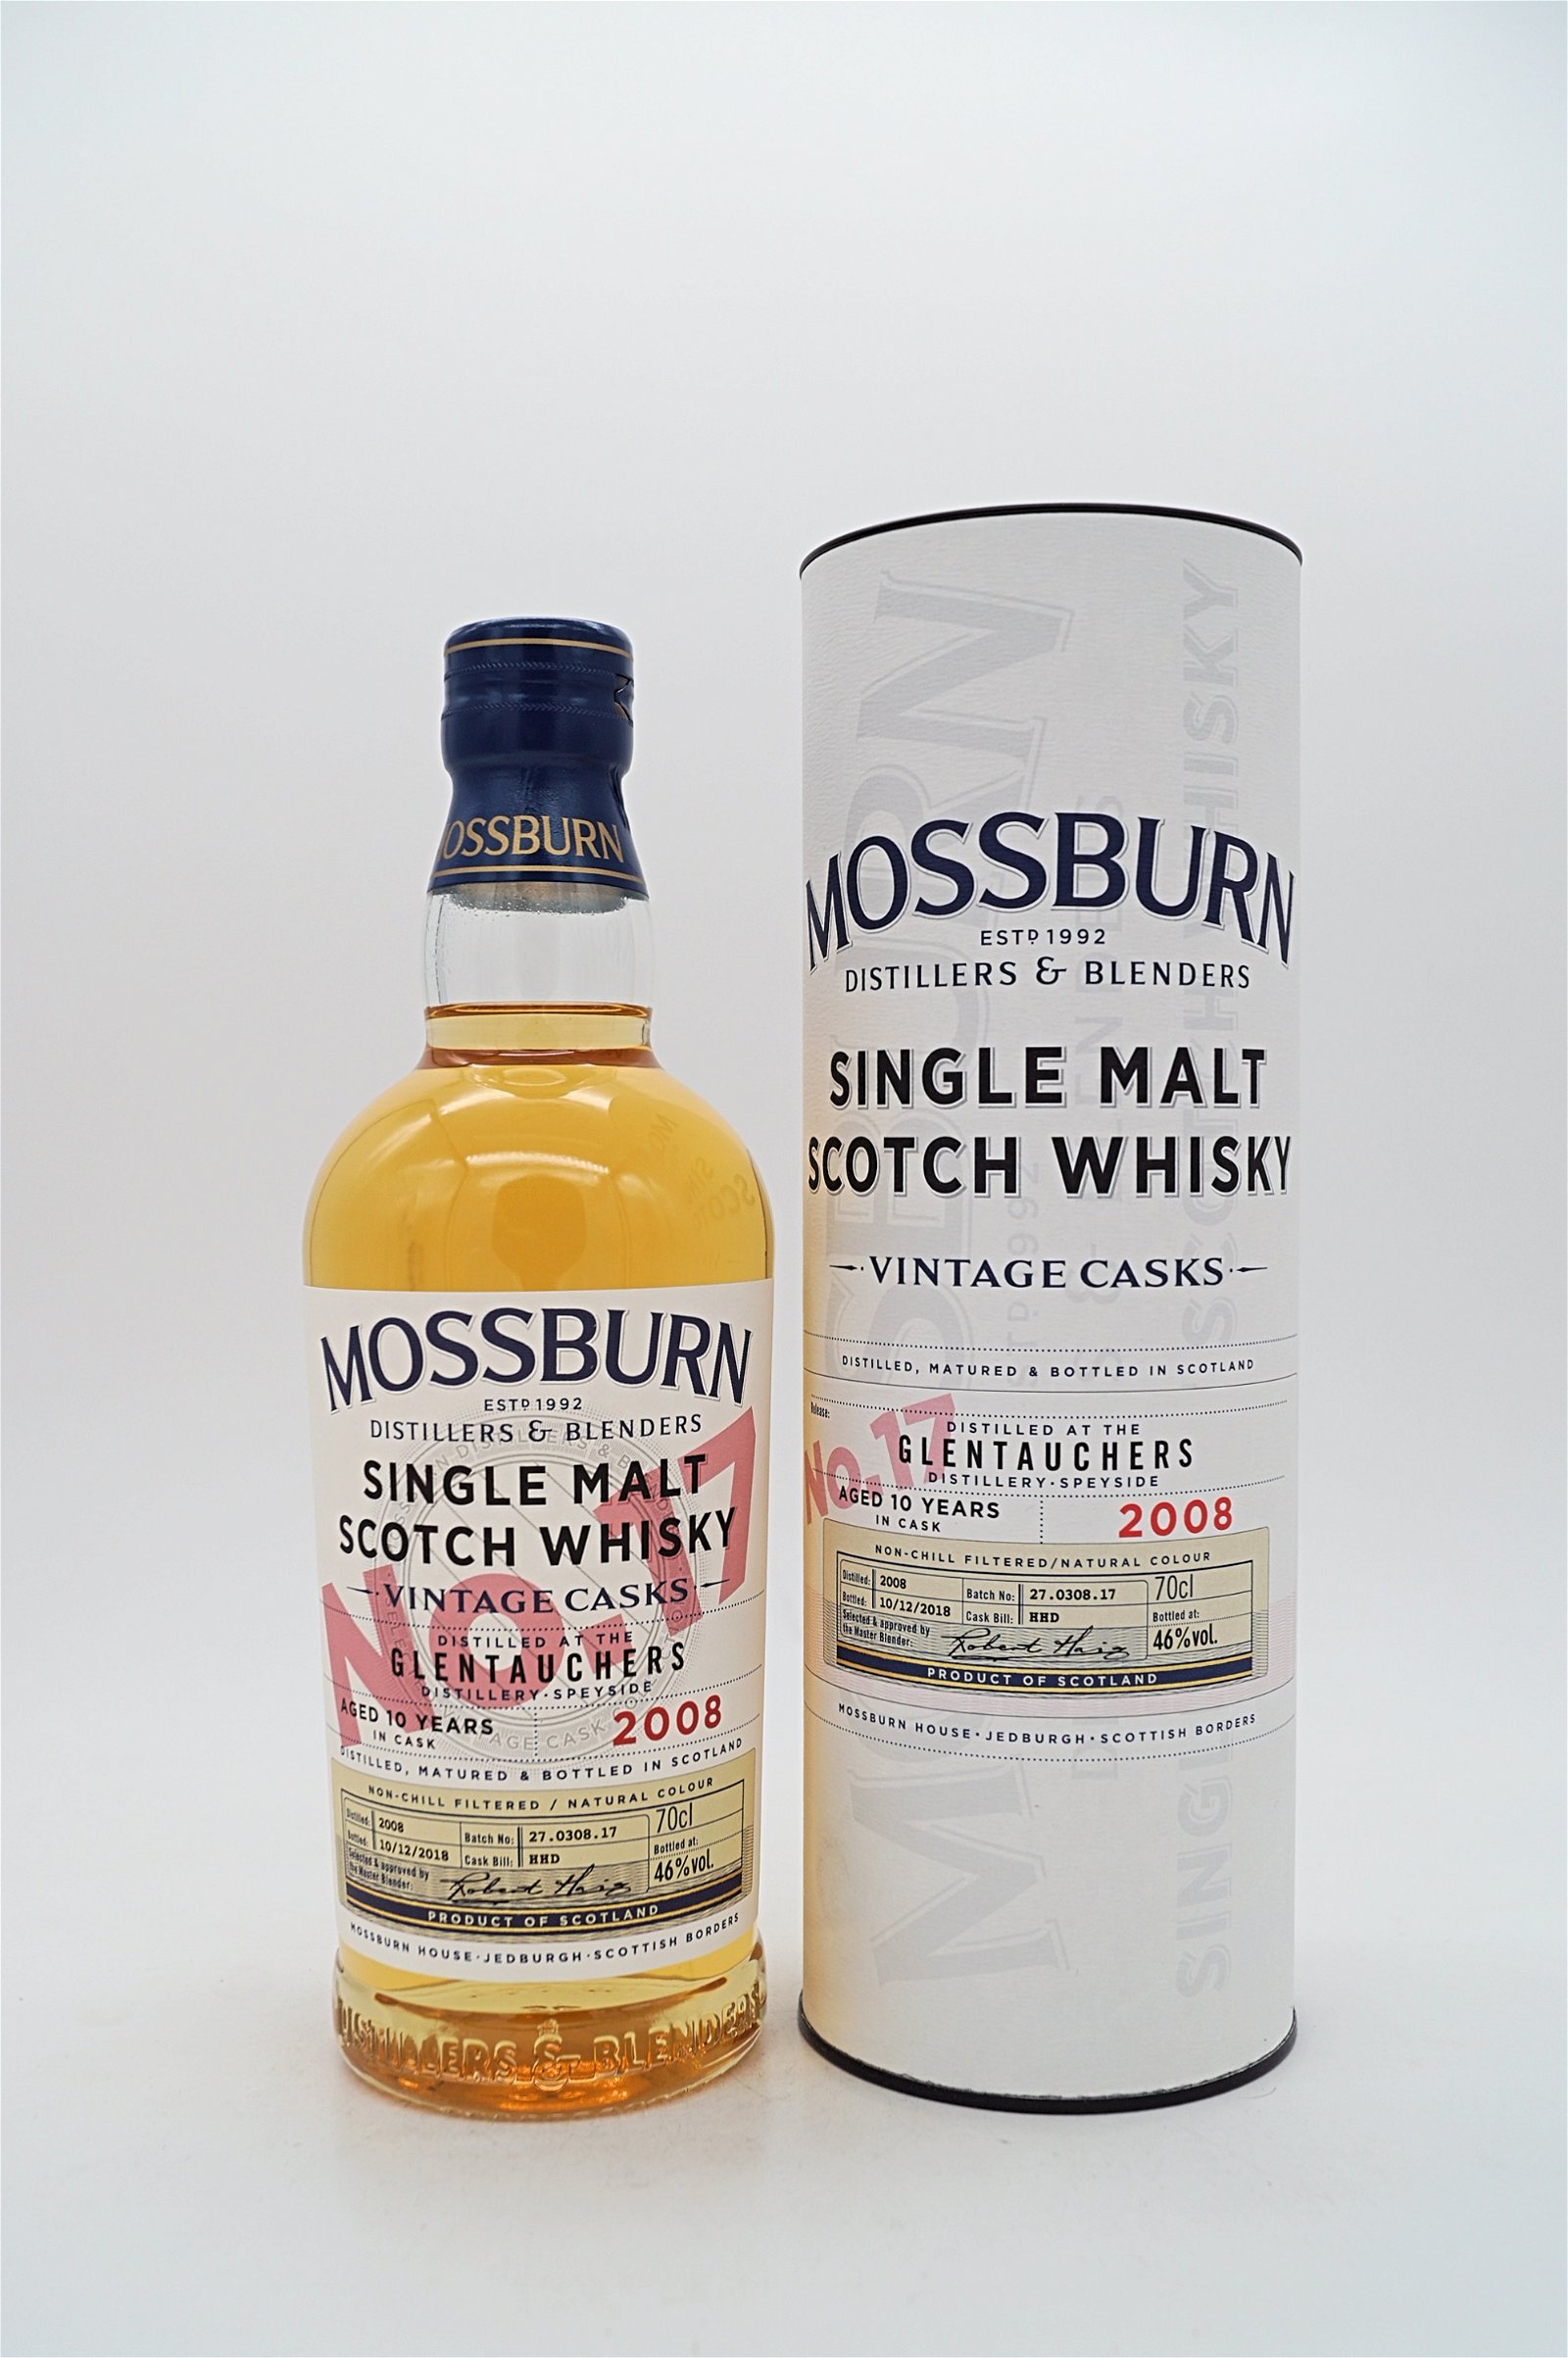 Mossburn 10 Jahre Glentauchers Vintage Cask Nr 17 Single Malt Scotch Whisky